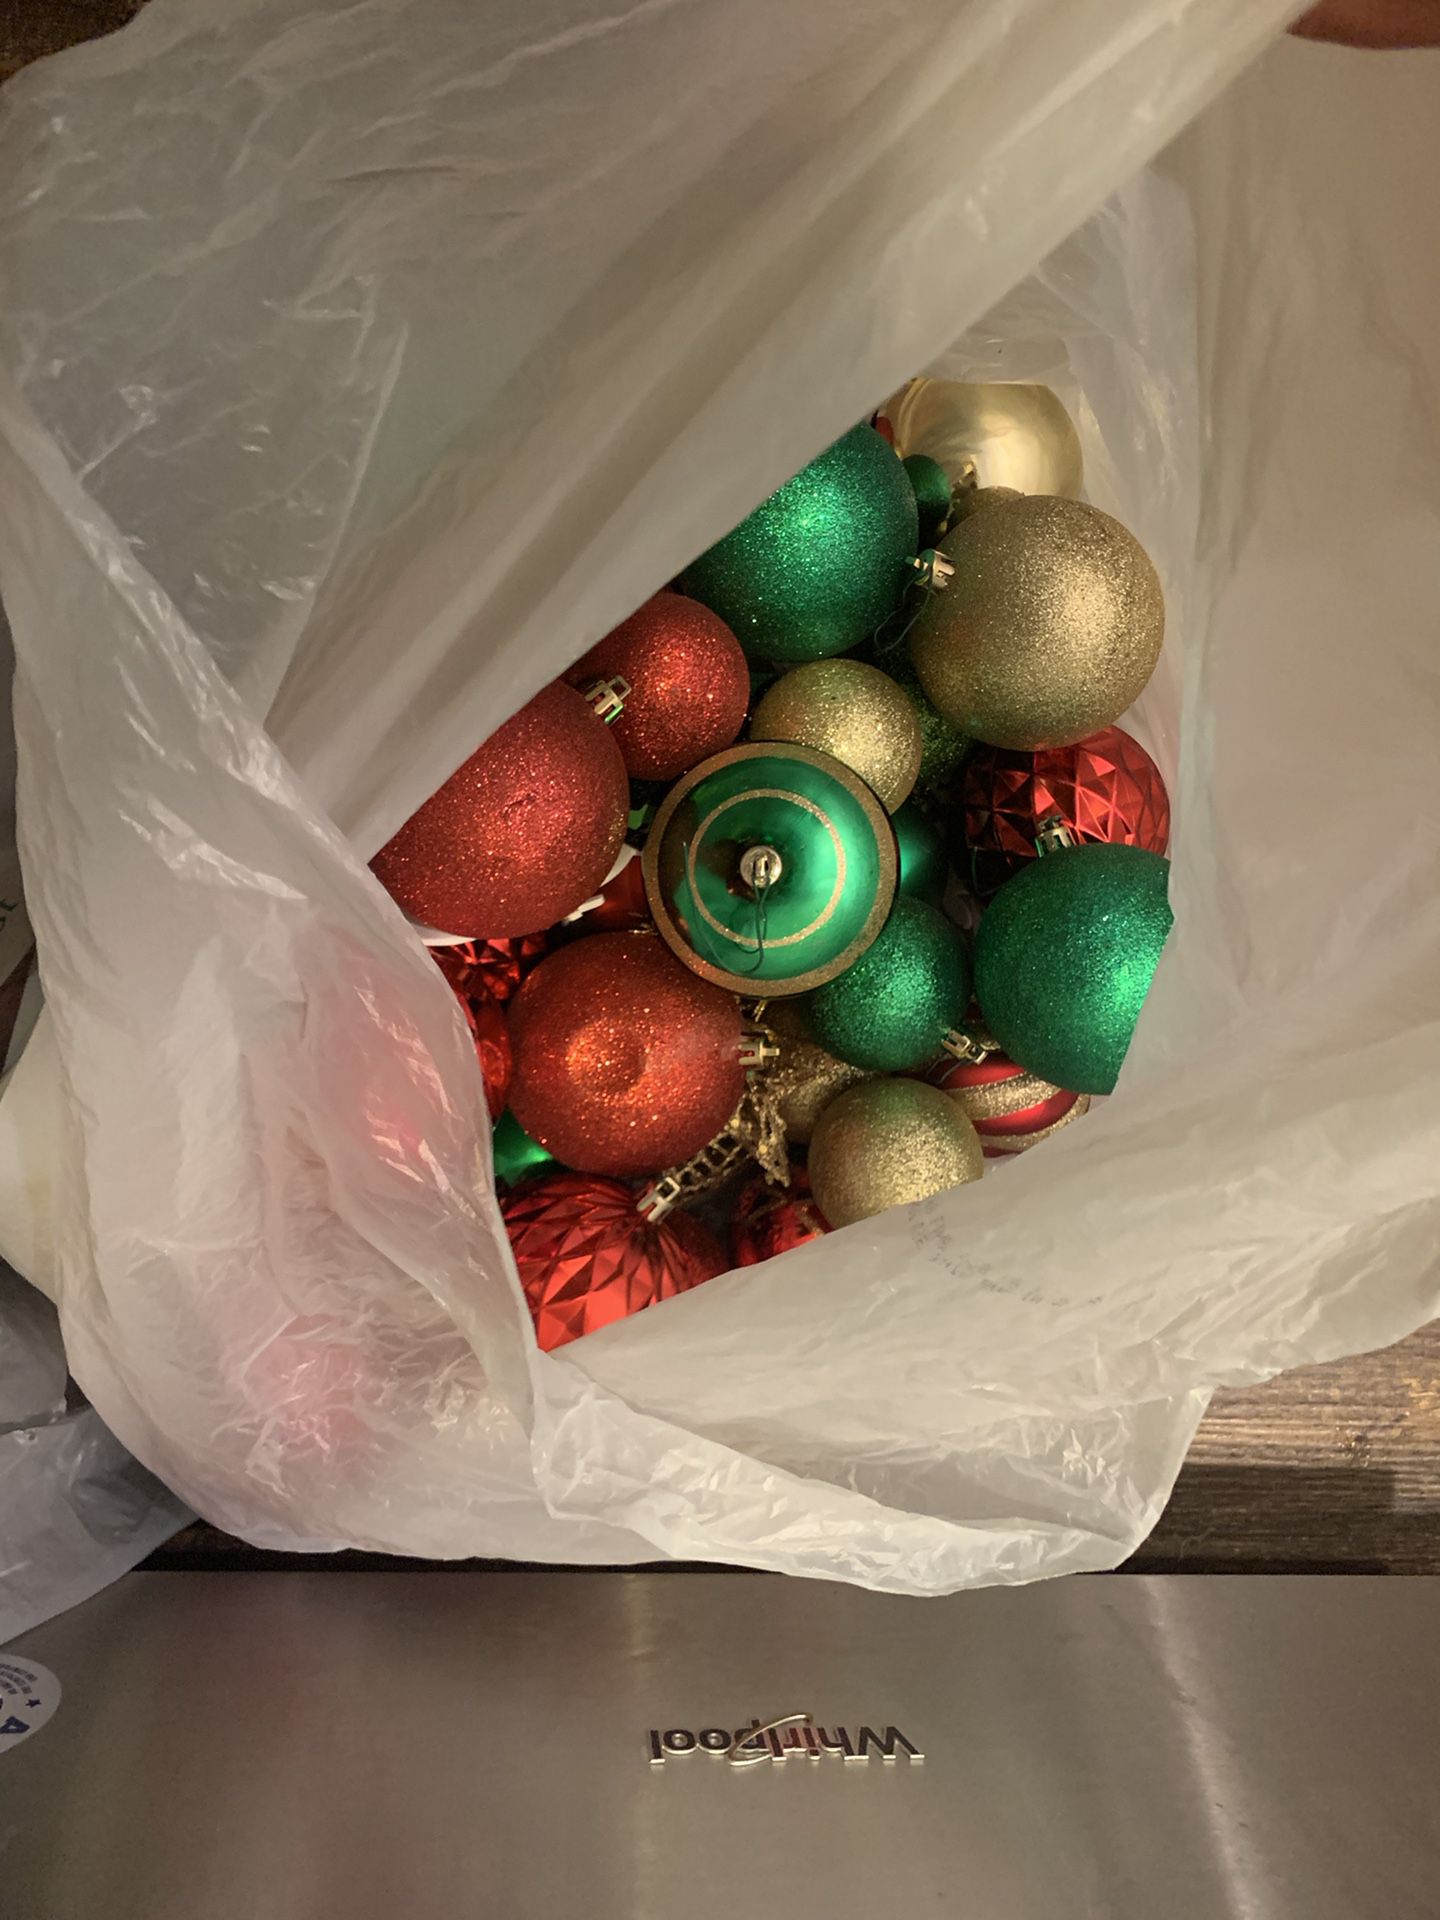 Free Christmas ornaments